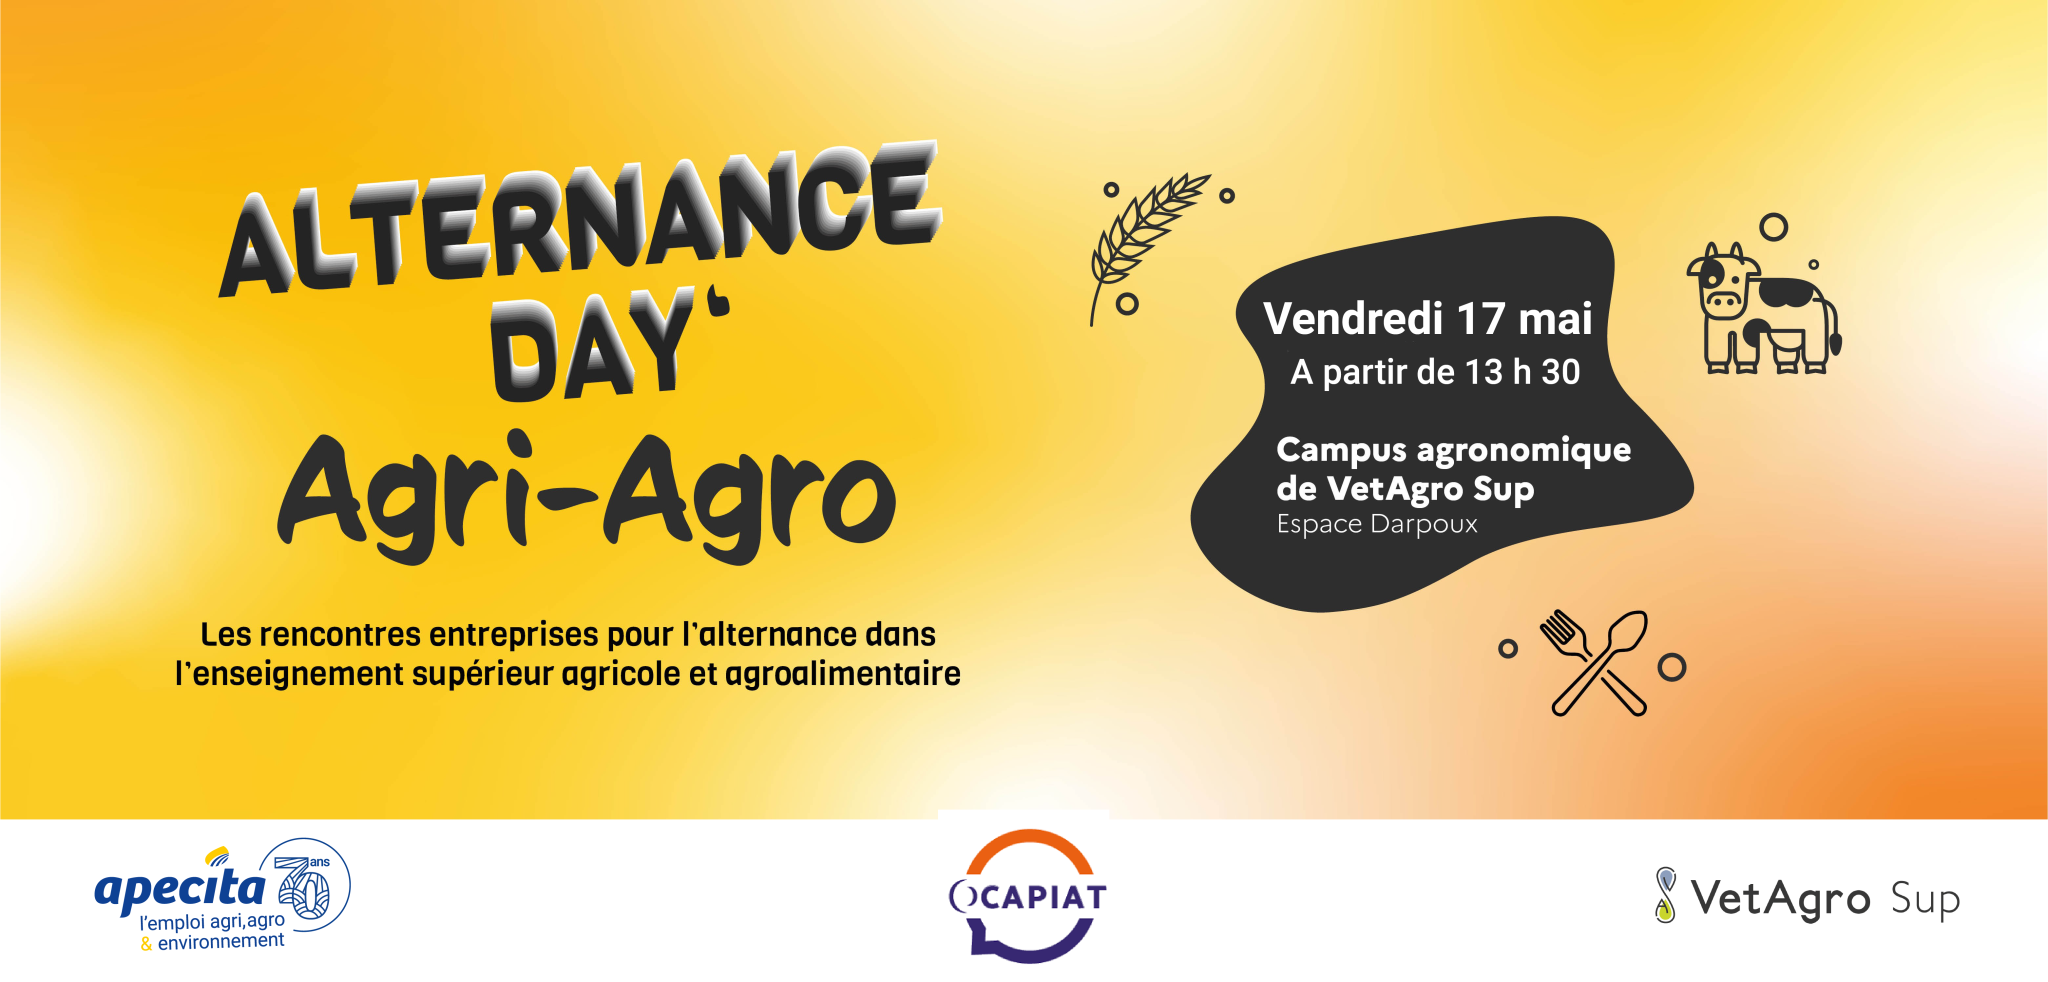 Alternance Day Agri - Agro